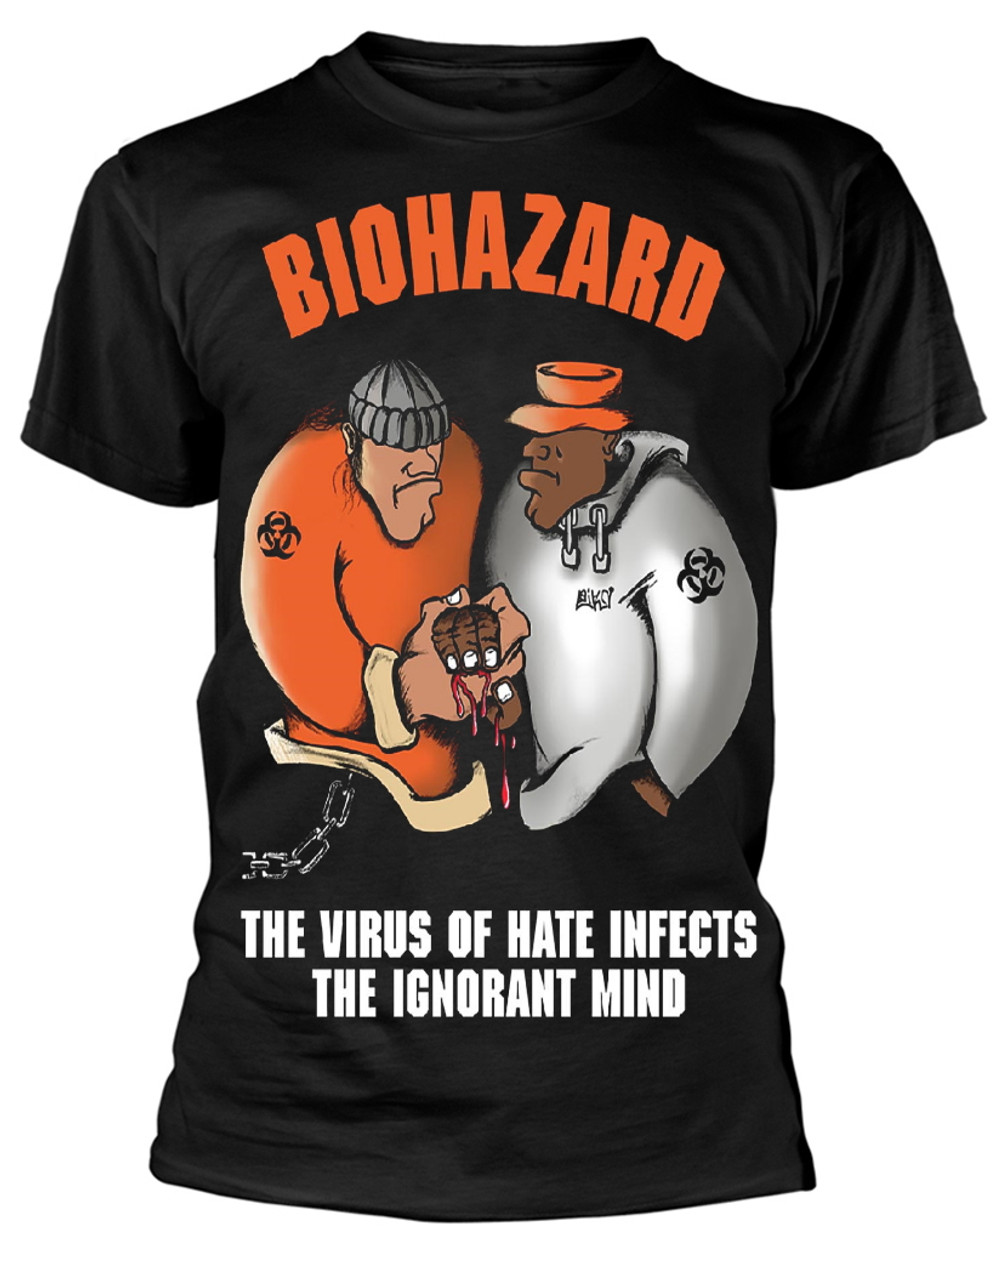 Biohazard 'The Virus Of Hate' (Black) T-Shirt